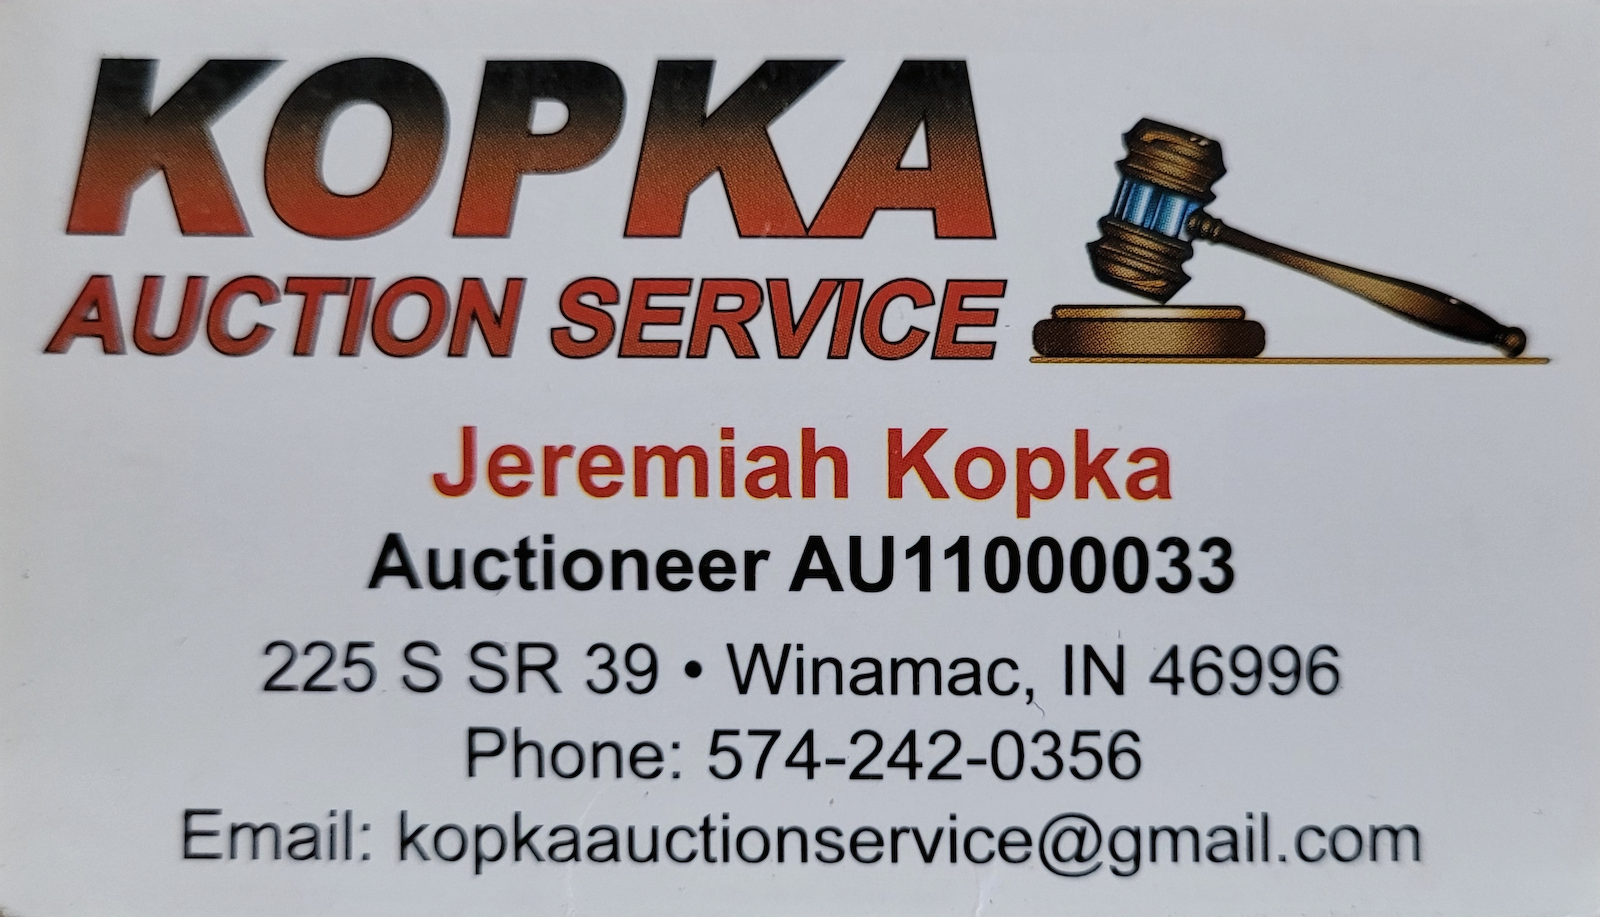 Kopka Auction Service